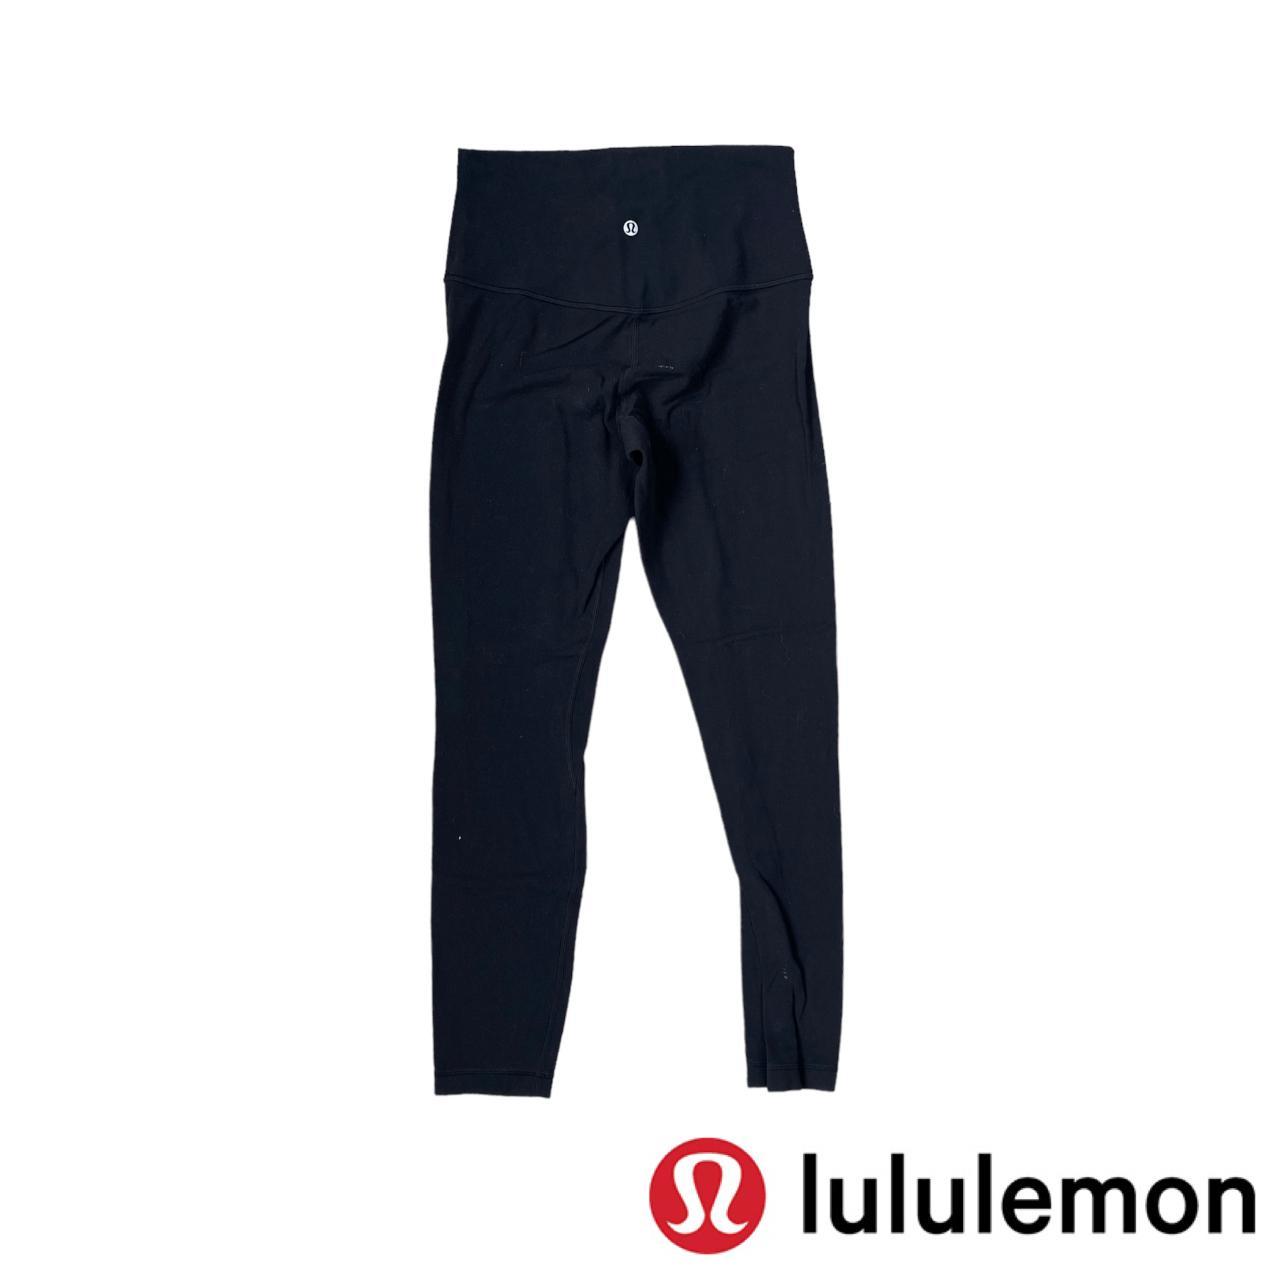 lululemon align pant ii black size 6 general wear - Depop